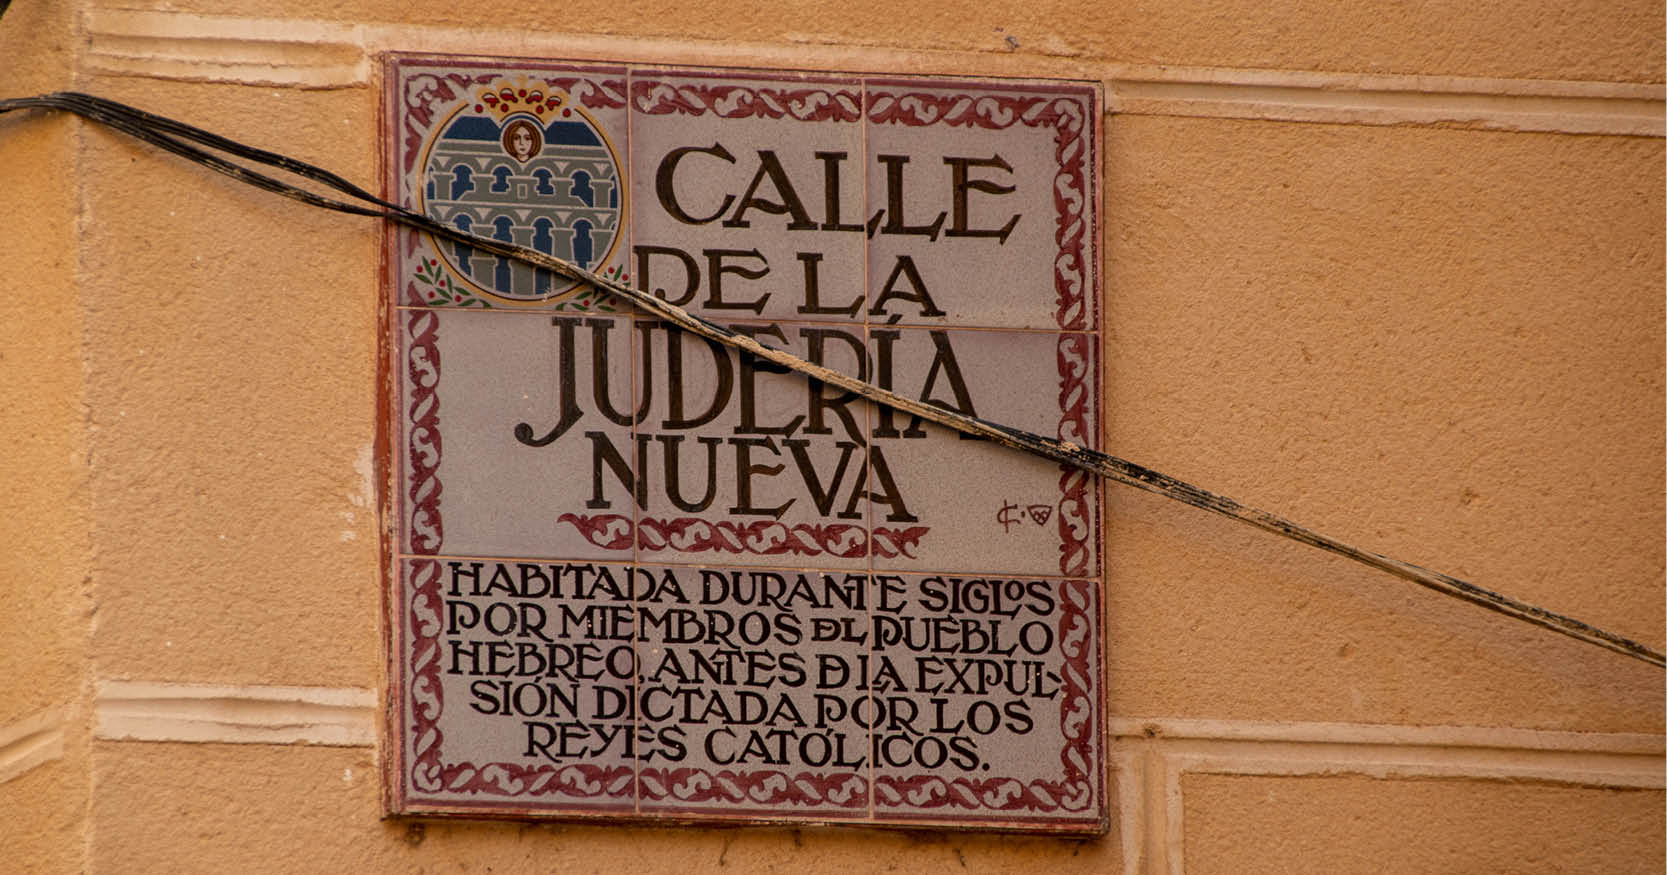 The walls of the Jewish Quarter in Segovia